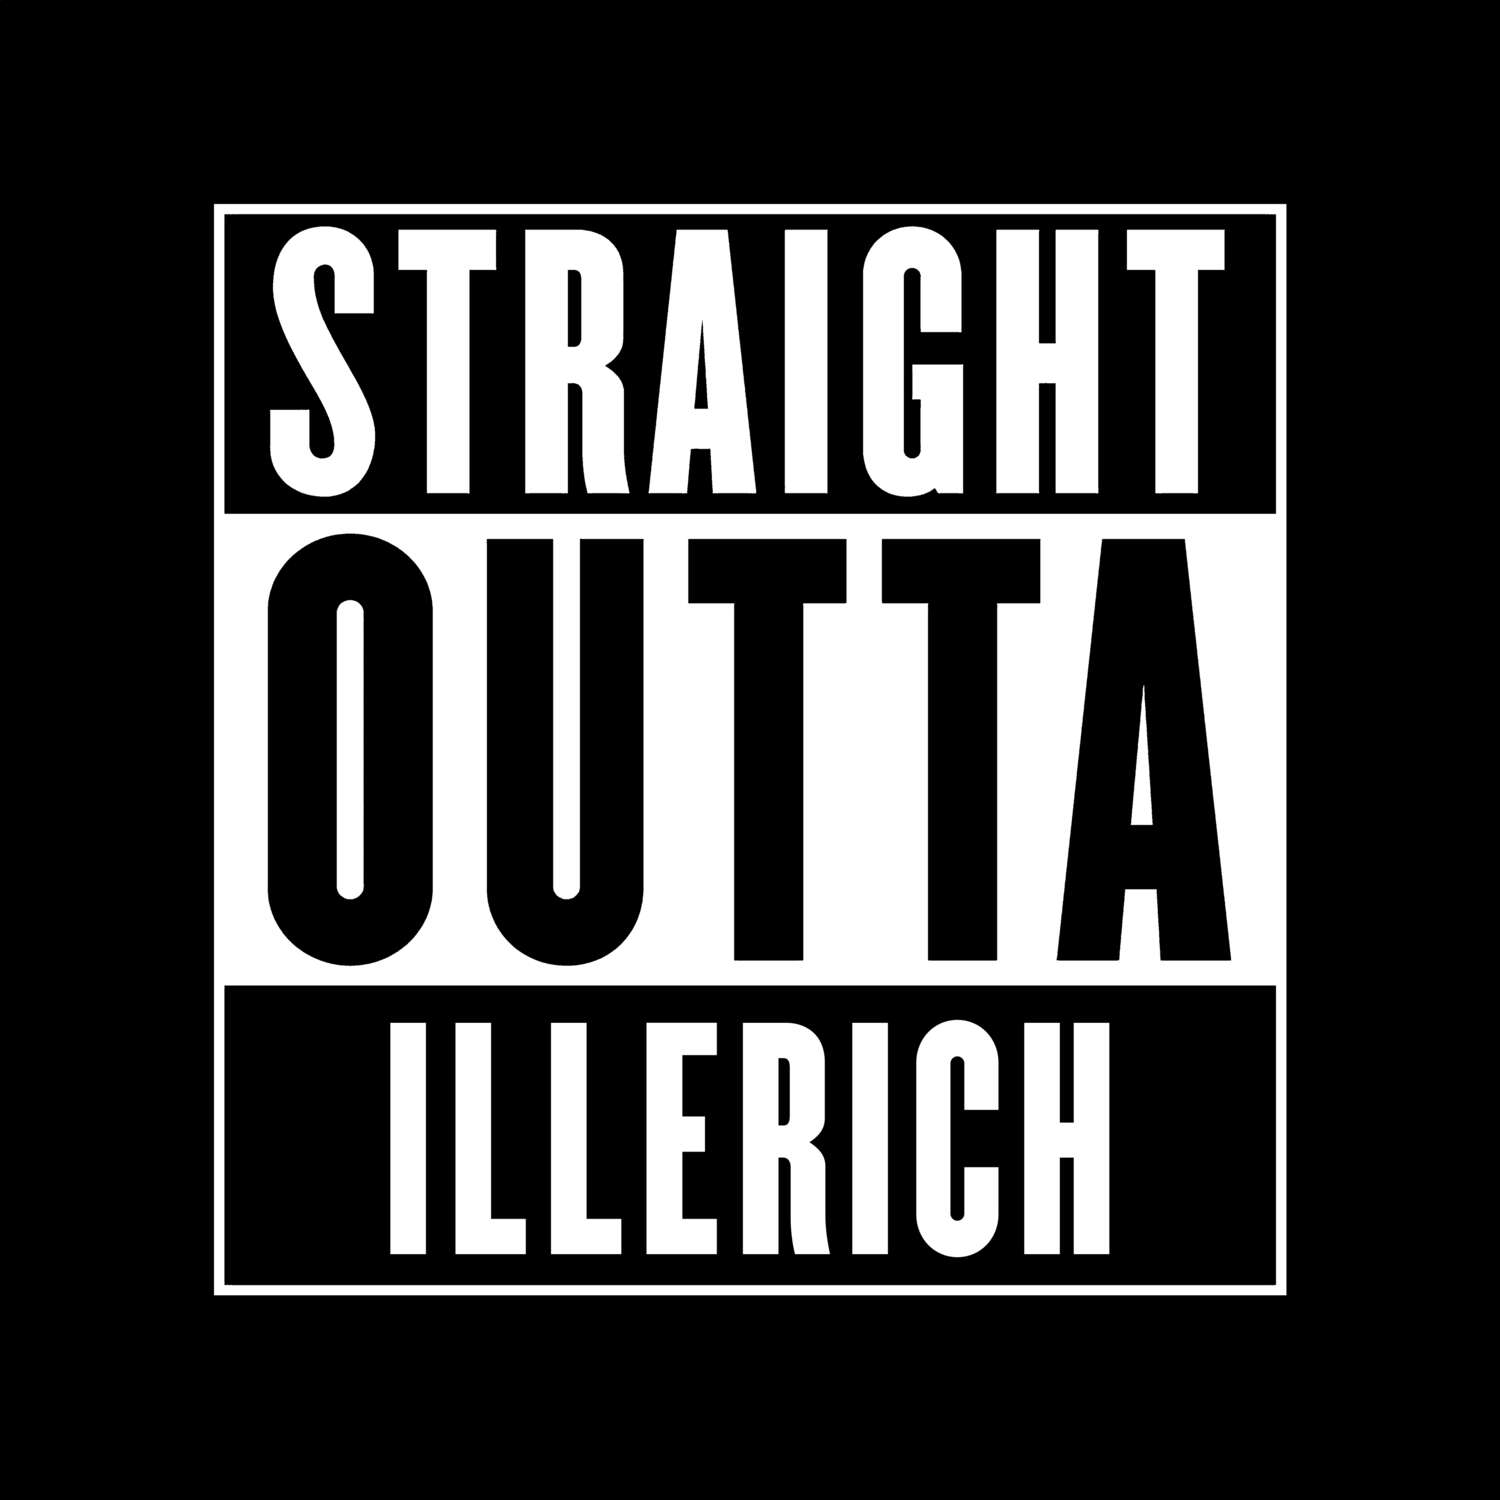 Illerich T-Shirt »Straight Outta«